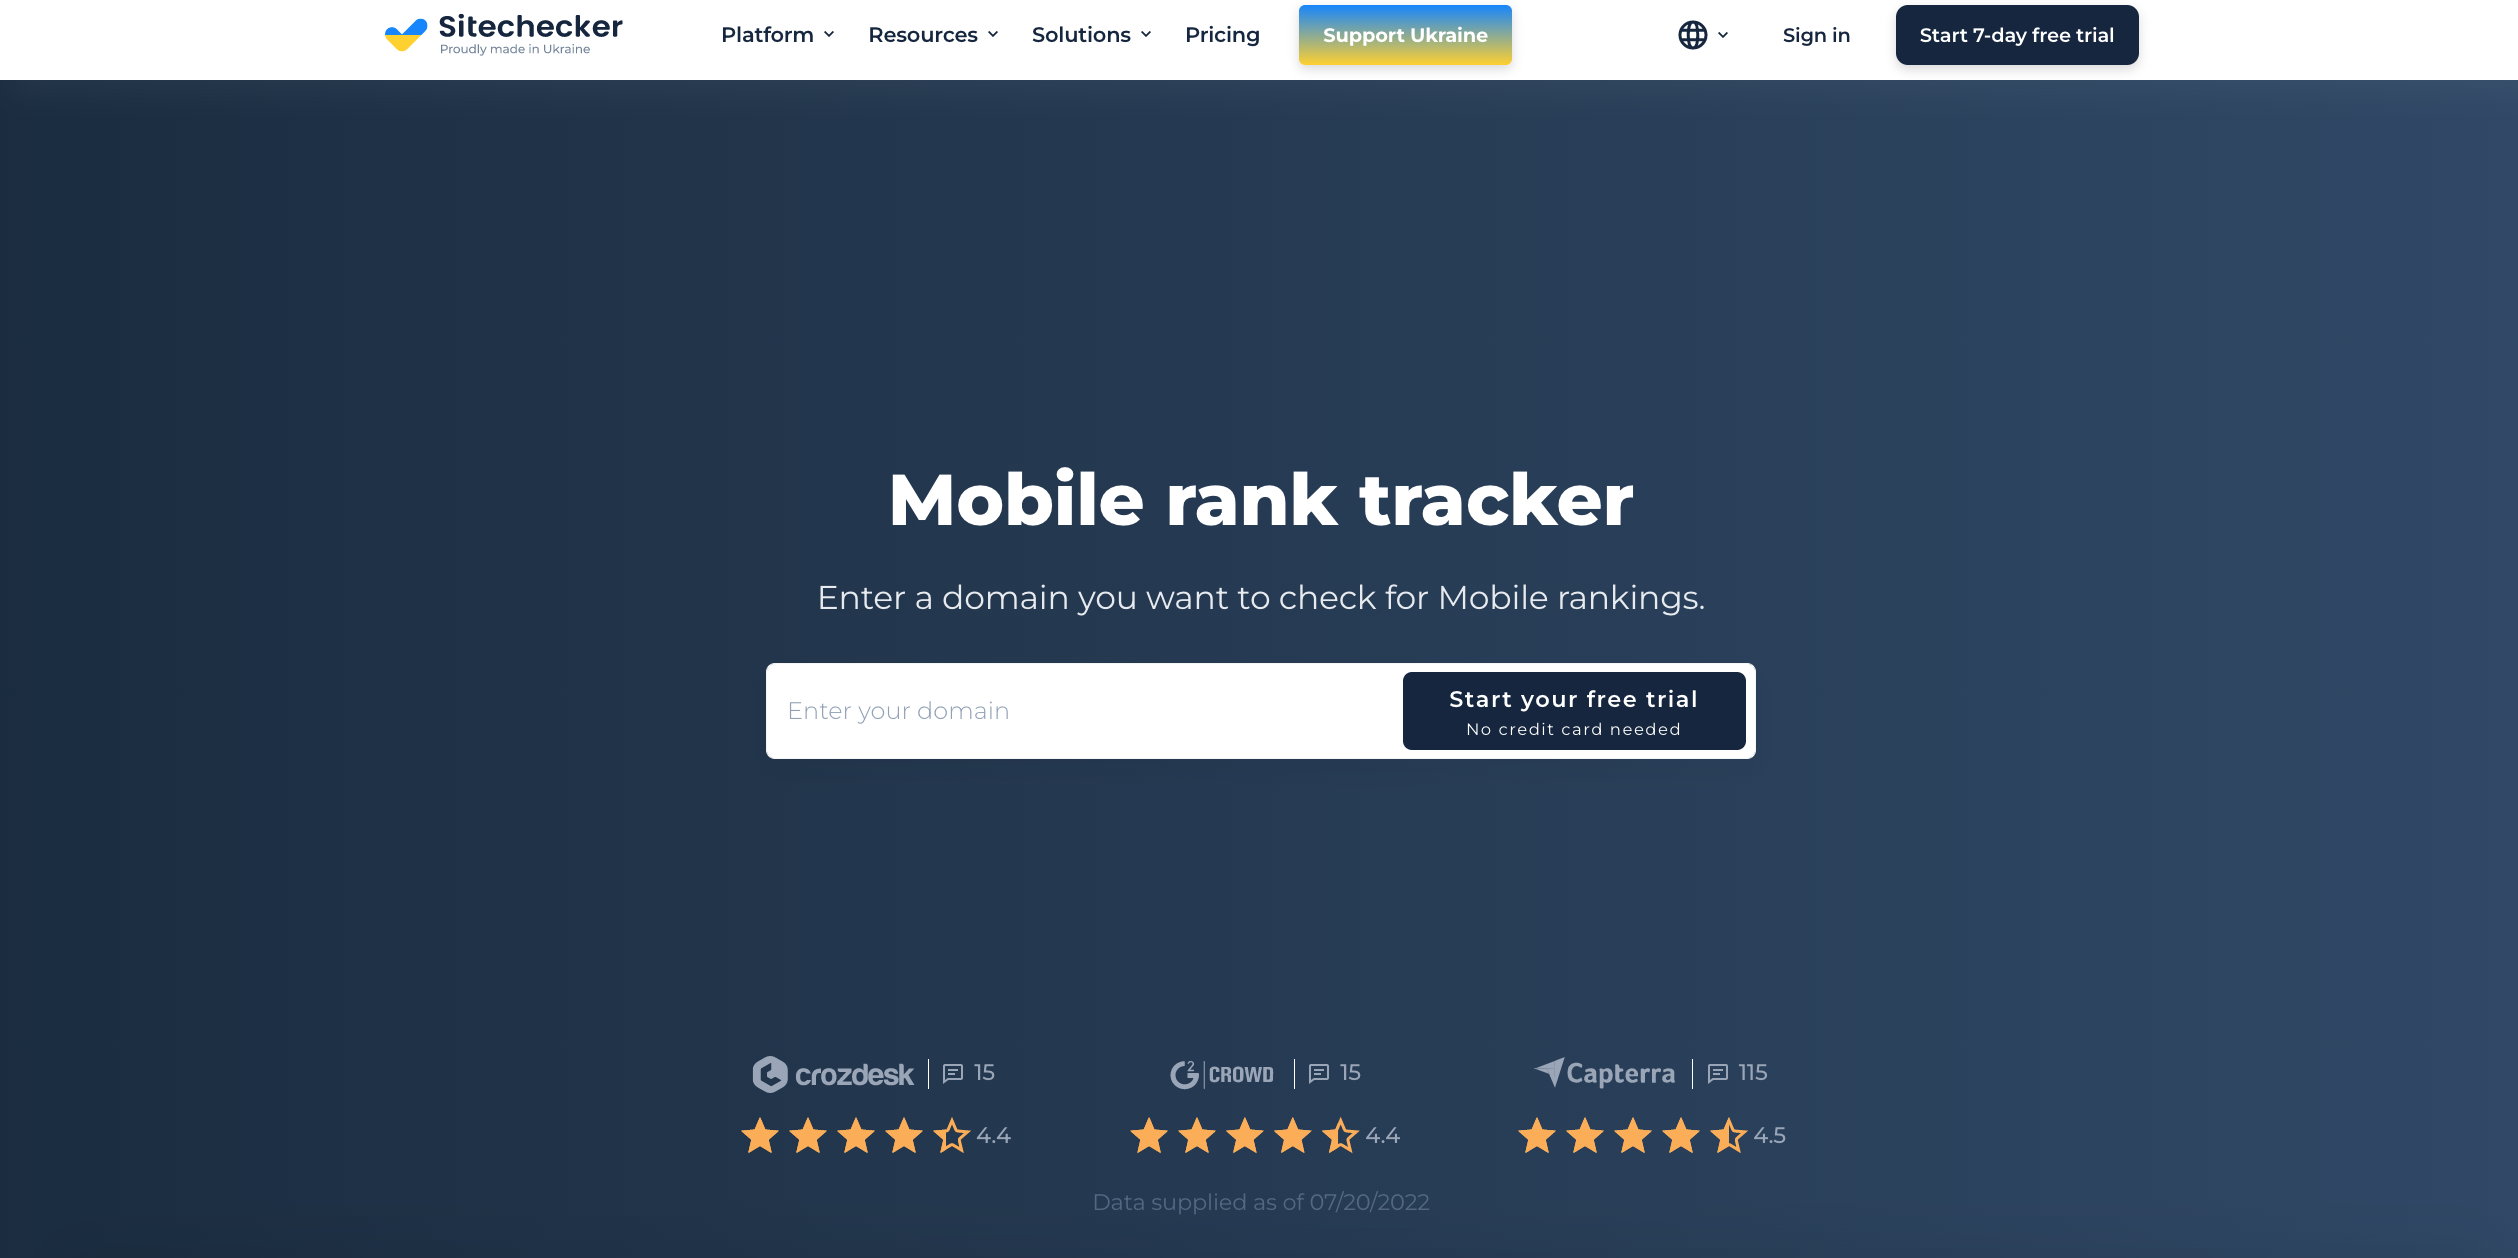 Mobile rank tracker free trial start